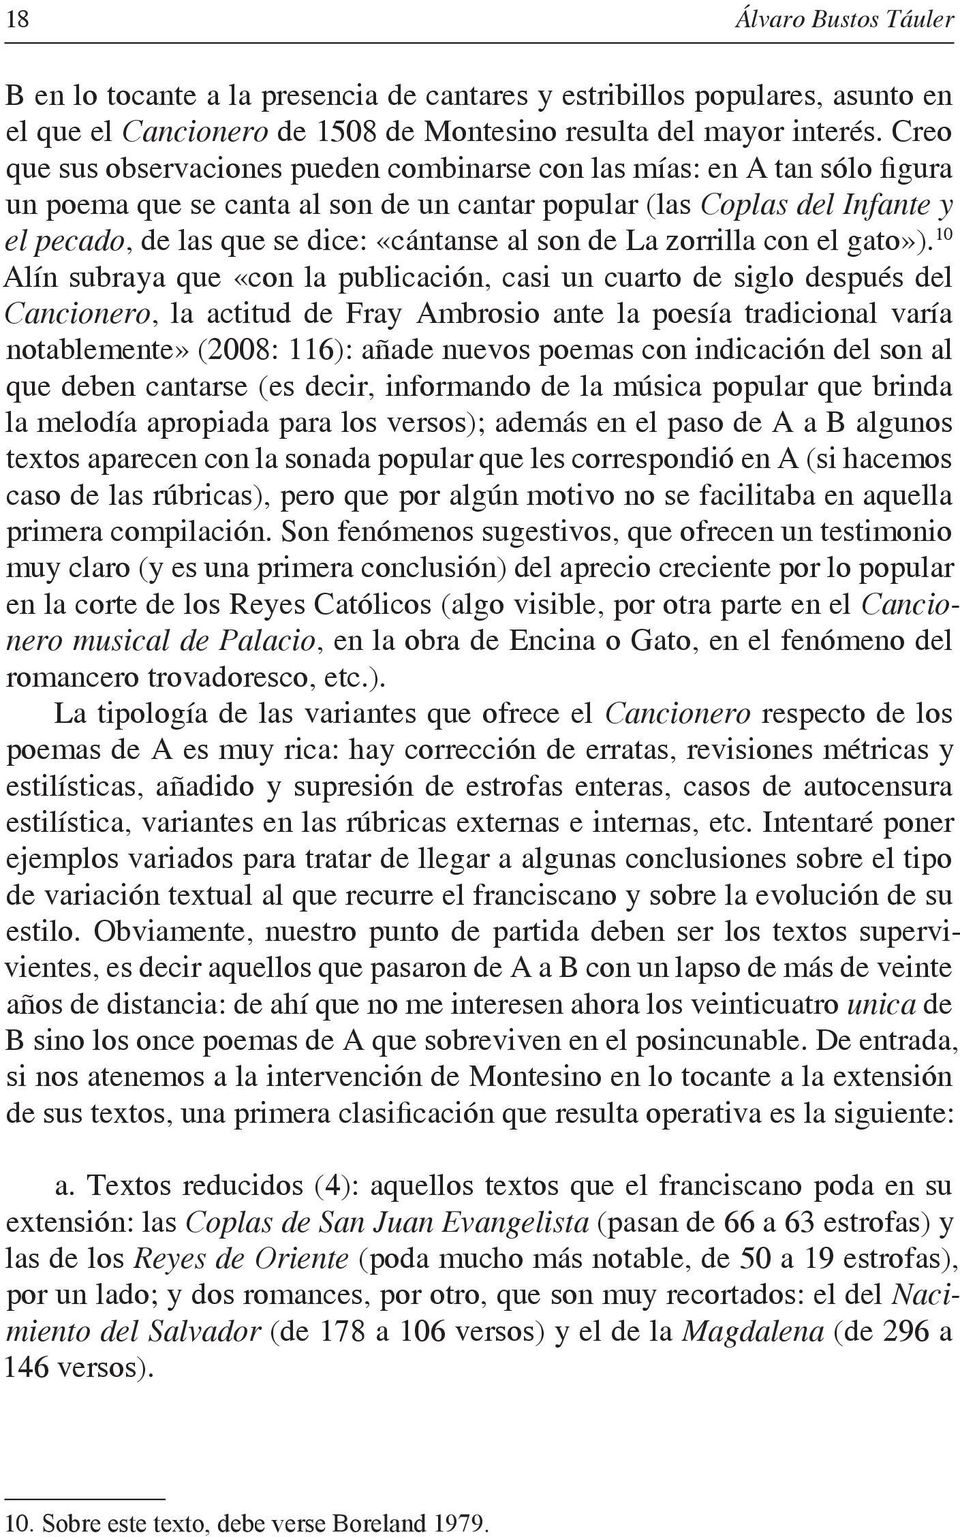 1 Hacia Un Canon De Transmision De La Poesia Antigua En La Imprenta Pdf Descargar Libre Sejam bem vindos a pagina oficial do cantinho. docplayer